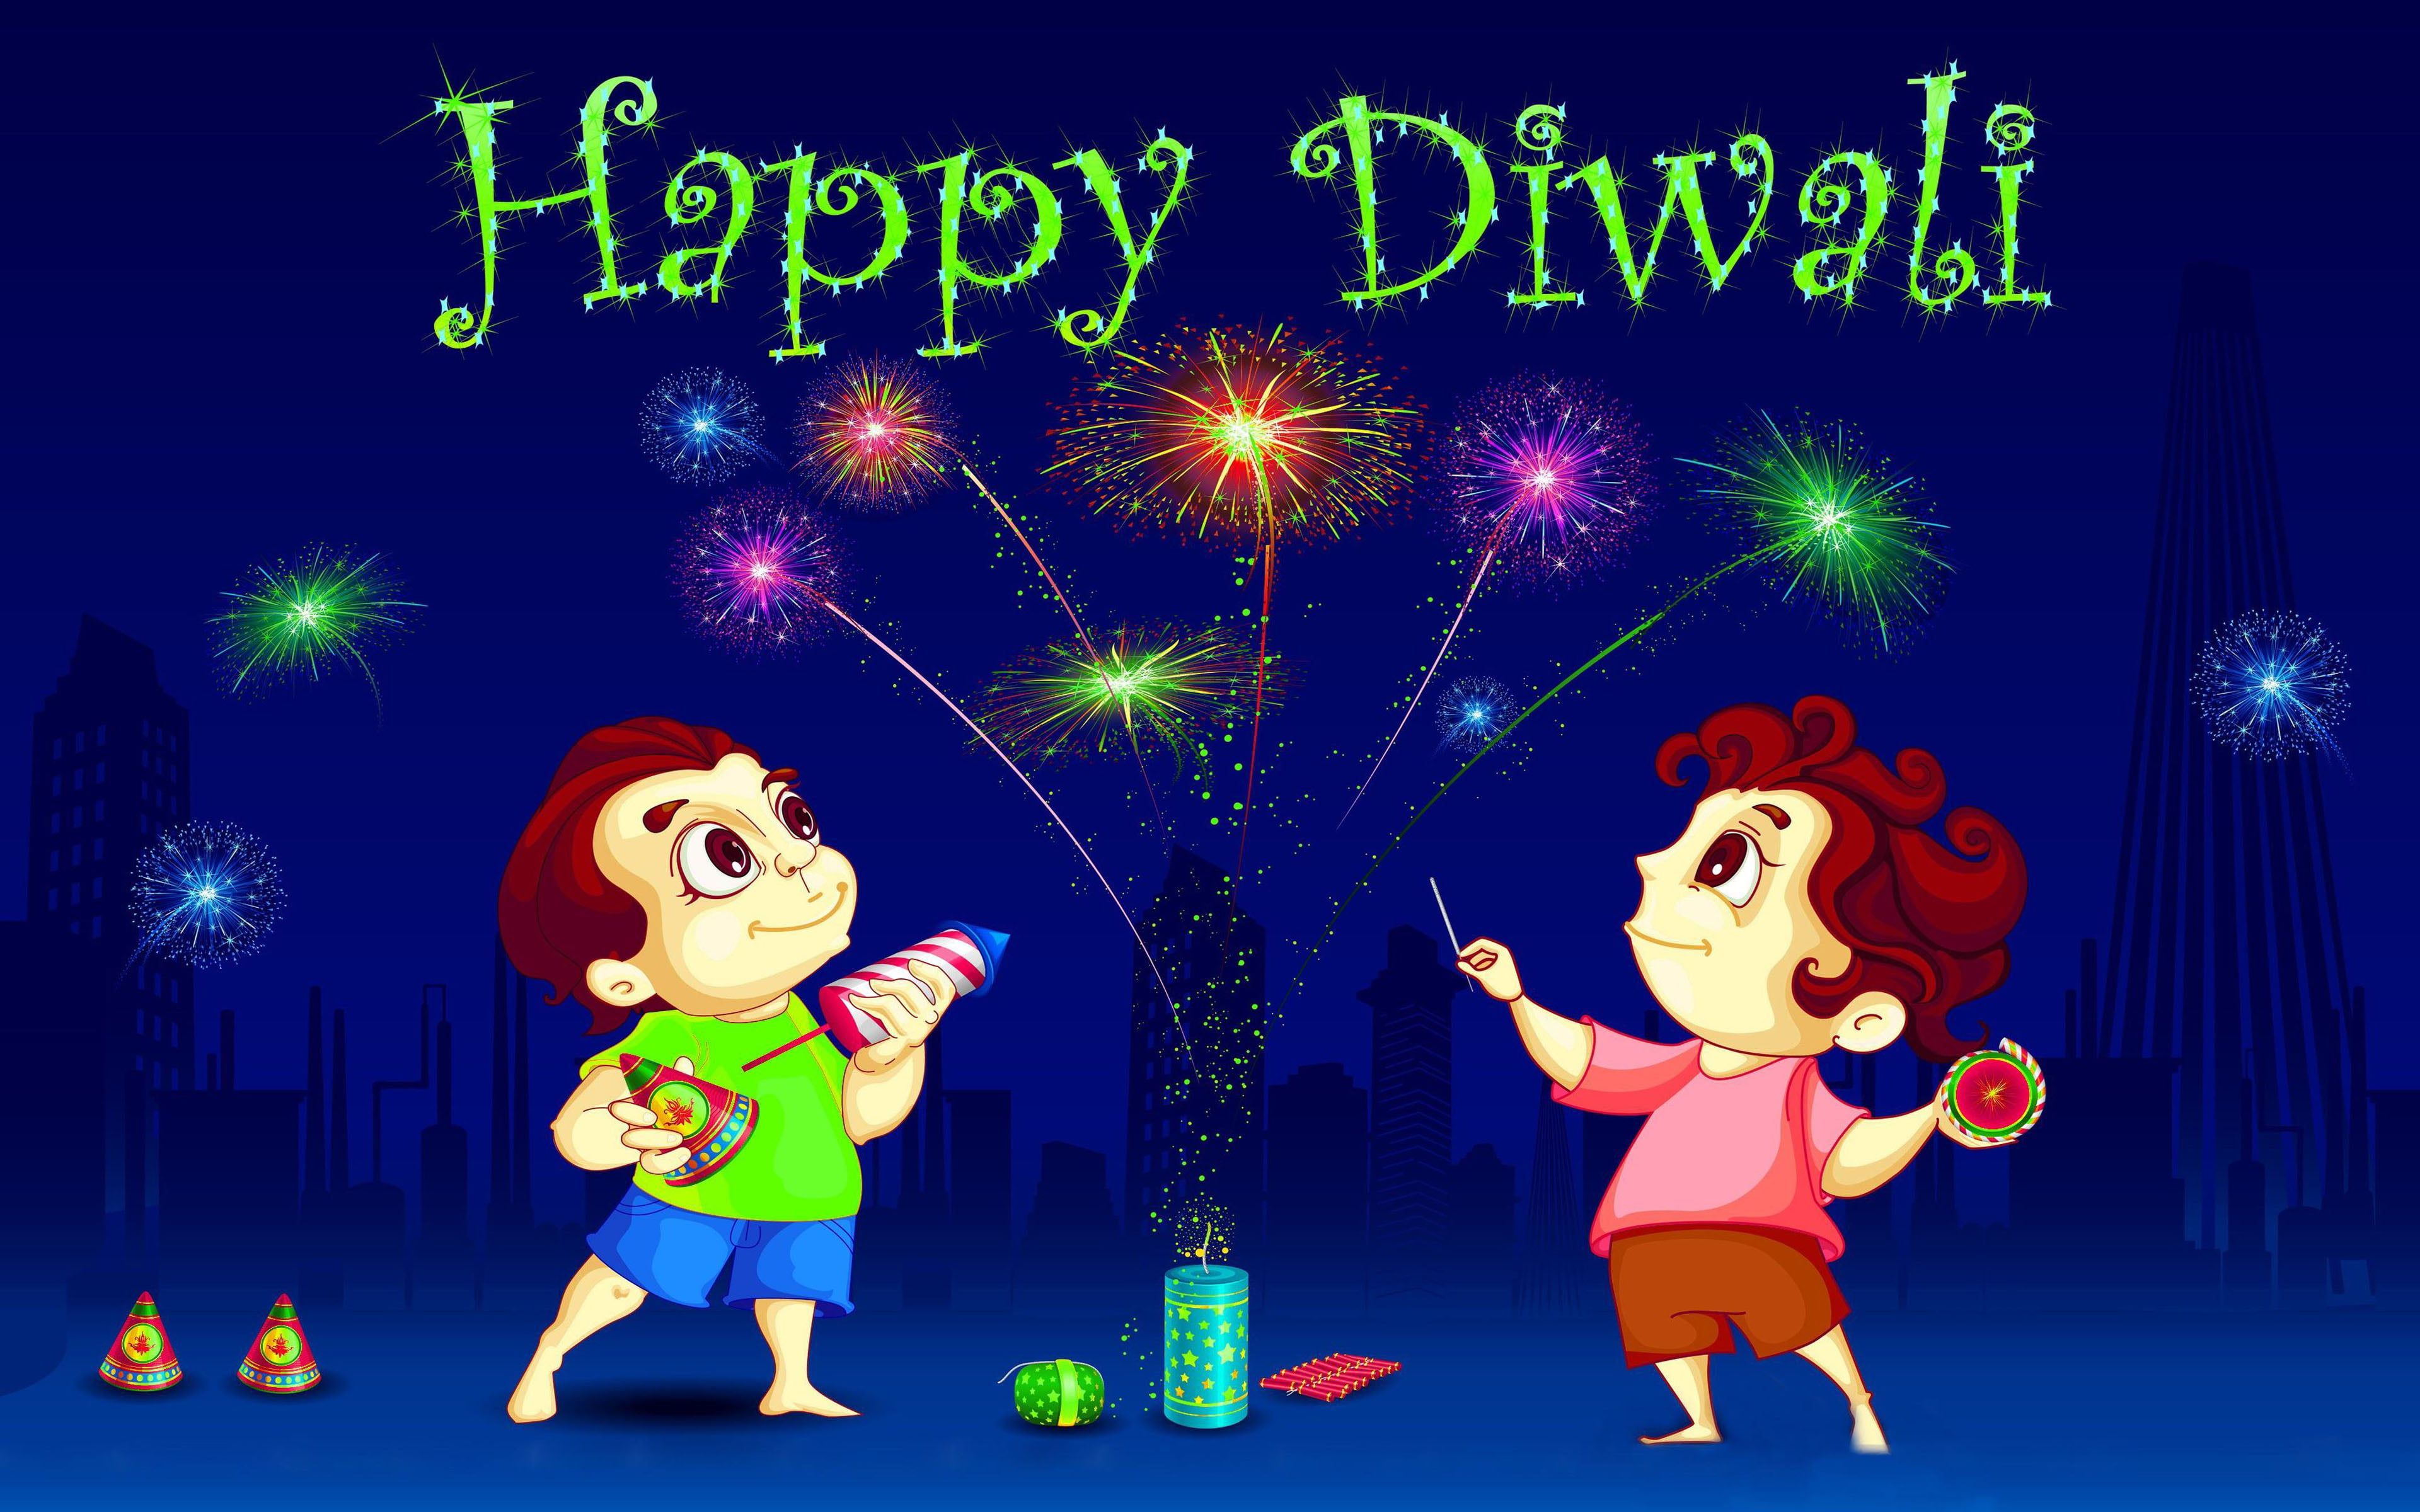 Best Diwali Greeting Images